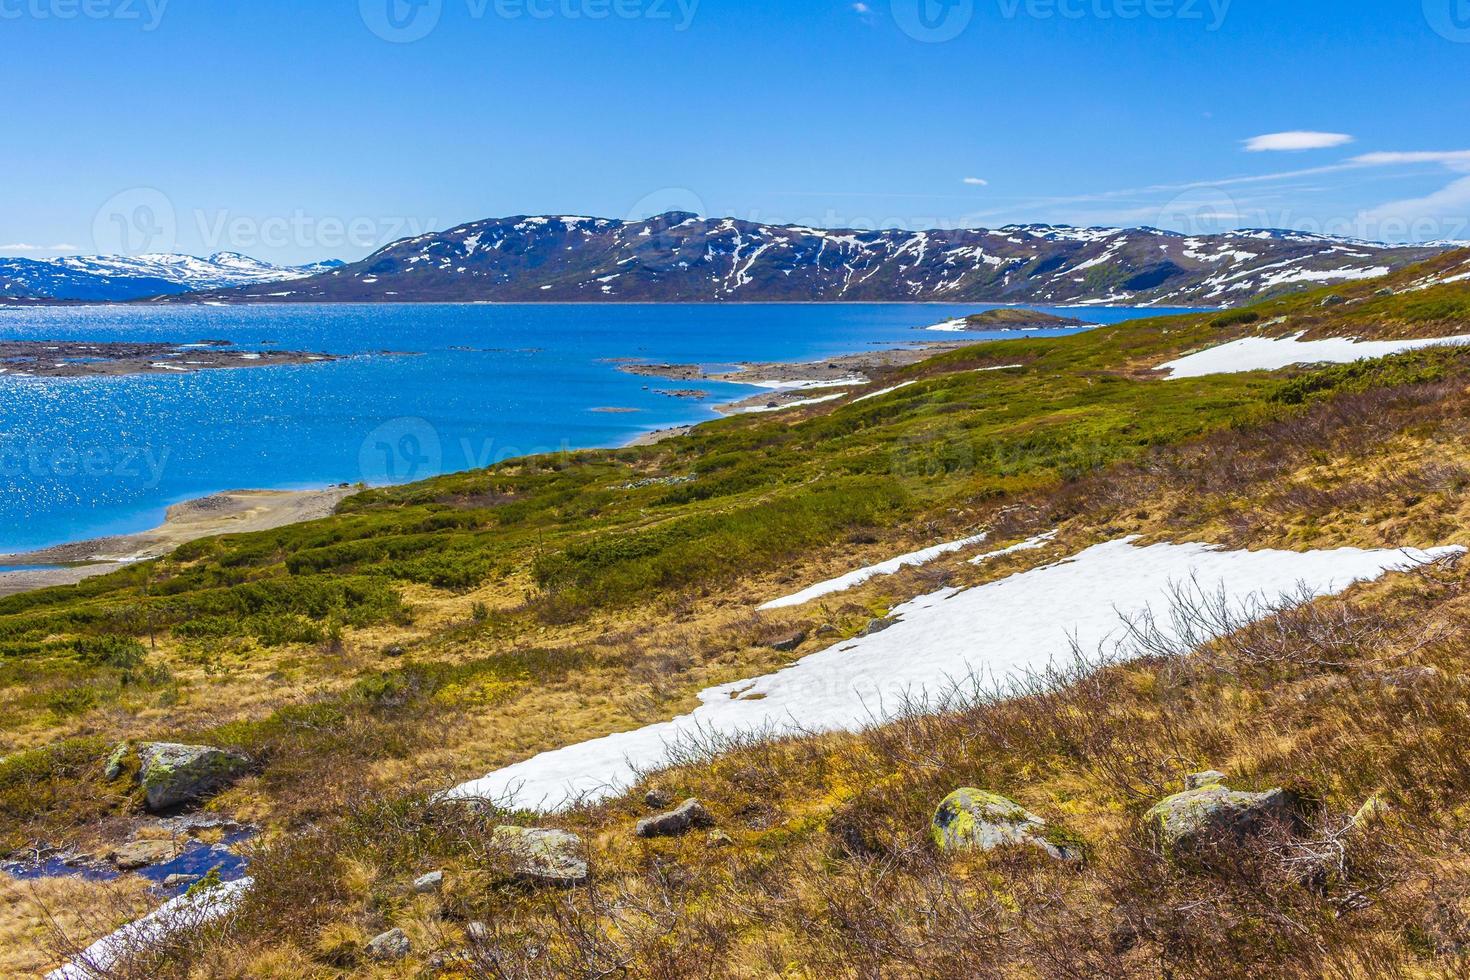 vavatn lago panorama paisagem pedregulhos montanhas hemsedal noruega. foto